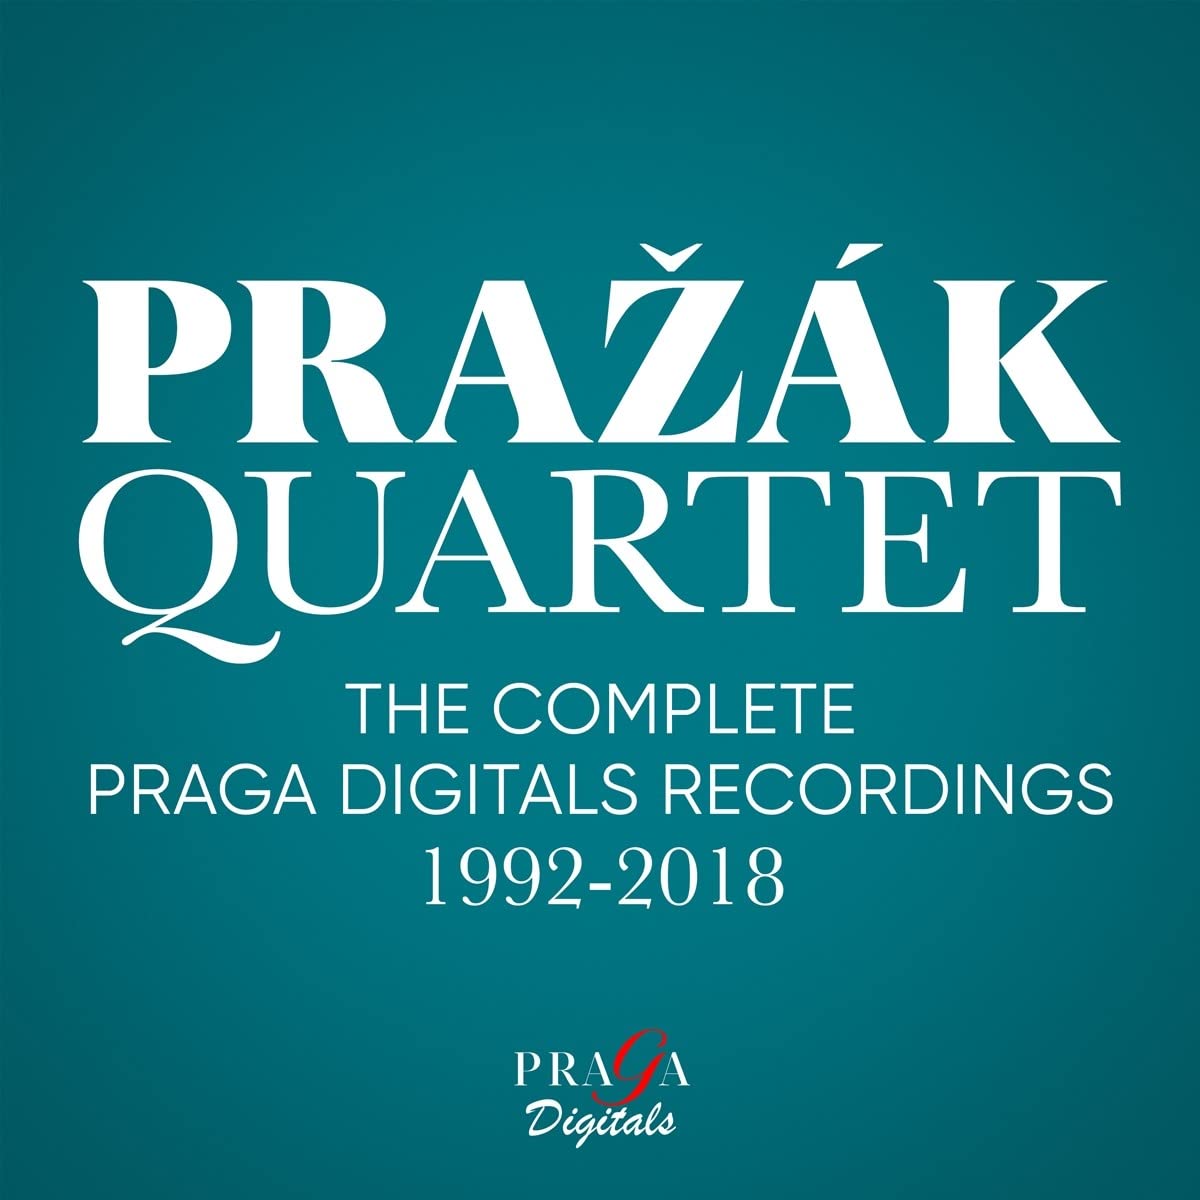 The　Quartet　Complete　1992-2018　Praga　à　Digitals　Recordings　Prazak　La　Boîte　Musique